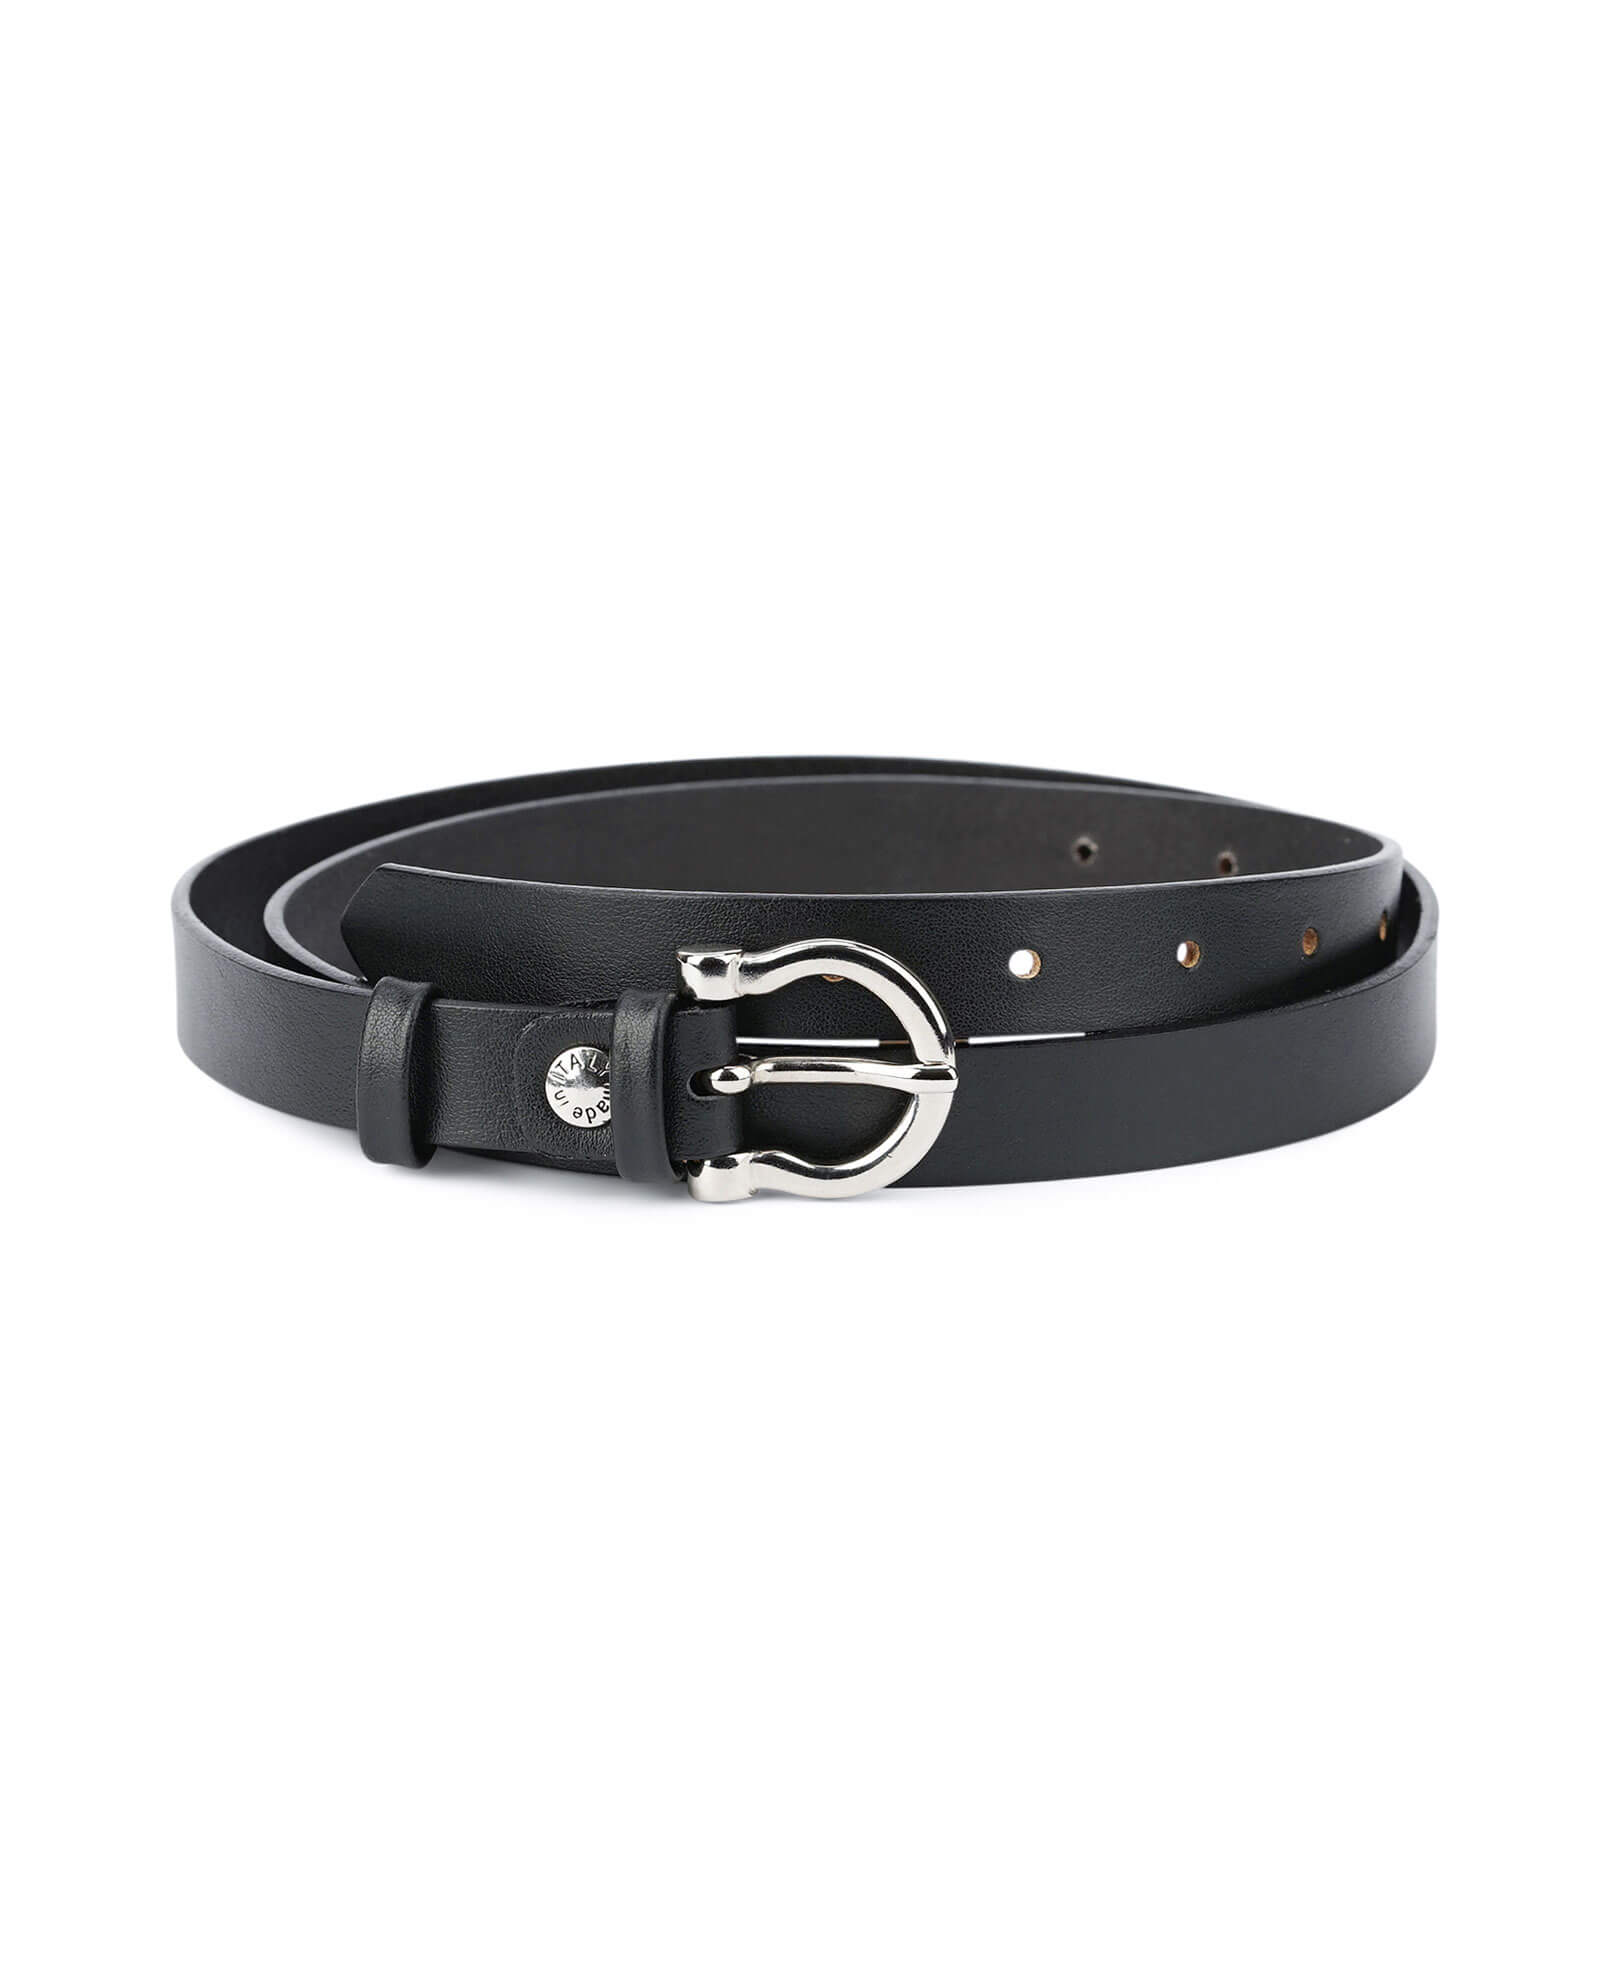 Buy Black Leather Belt For Children | LeatherBeltsOnline.com